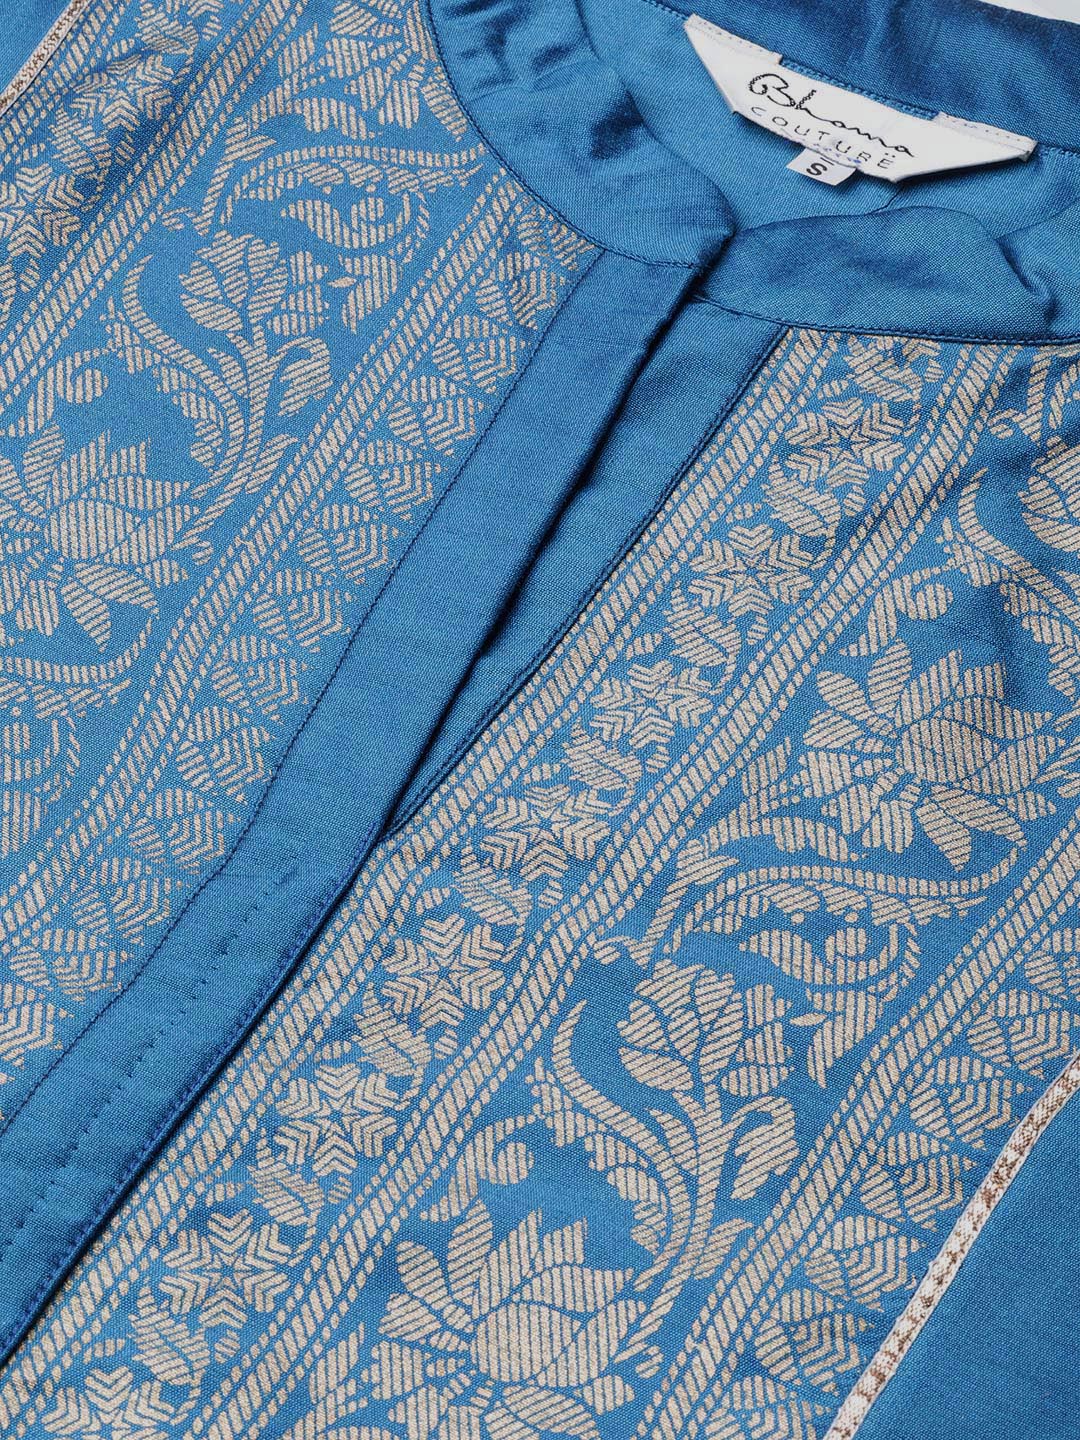 Women's Blue And Golden Yoke Design Foil Print Kurta With Palazzos - Bhama Couture